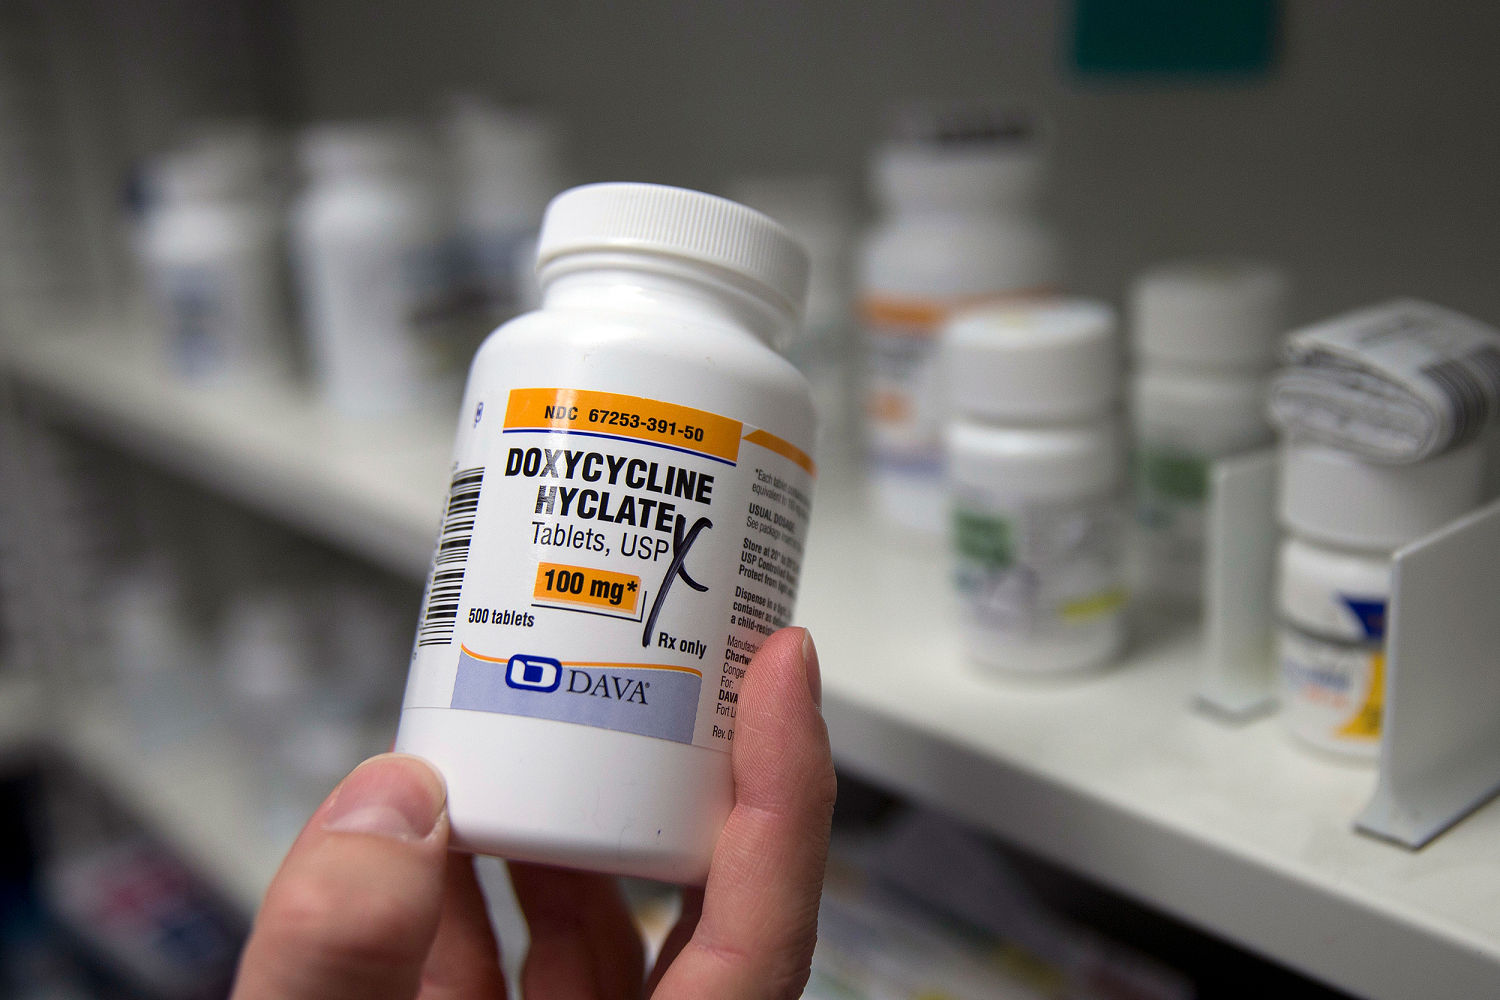 Preventive antibiotics may help curb the STI epidemic, experts say